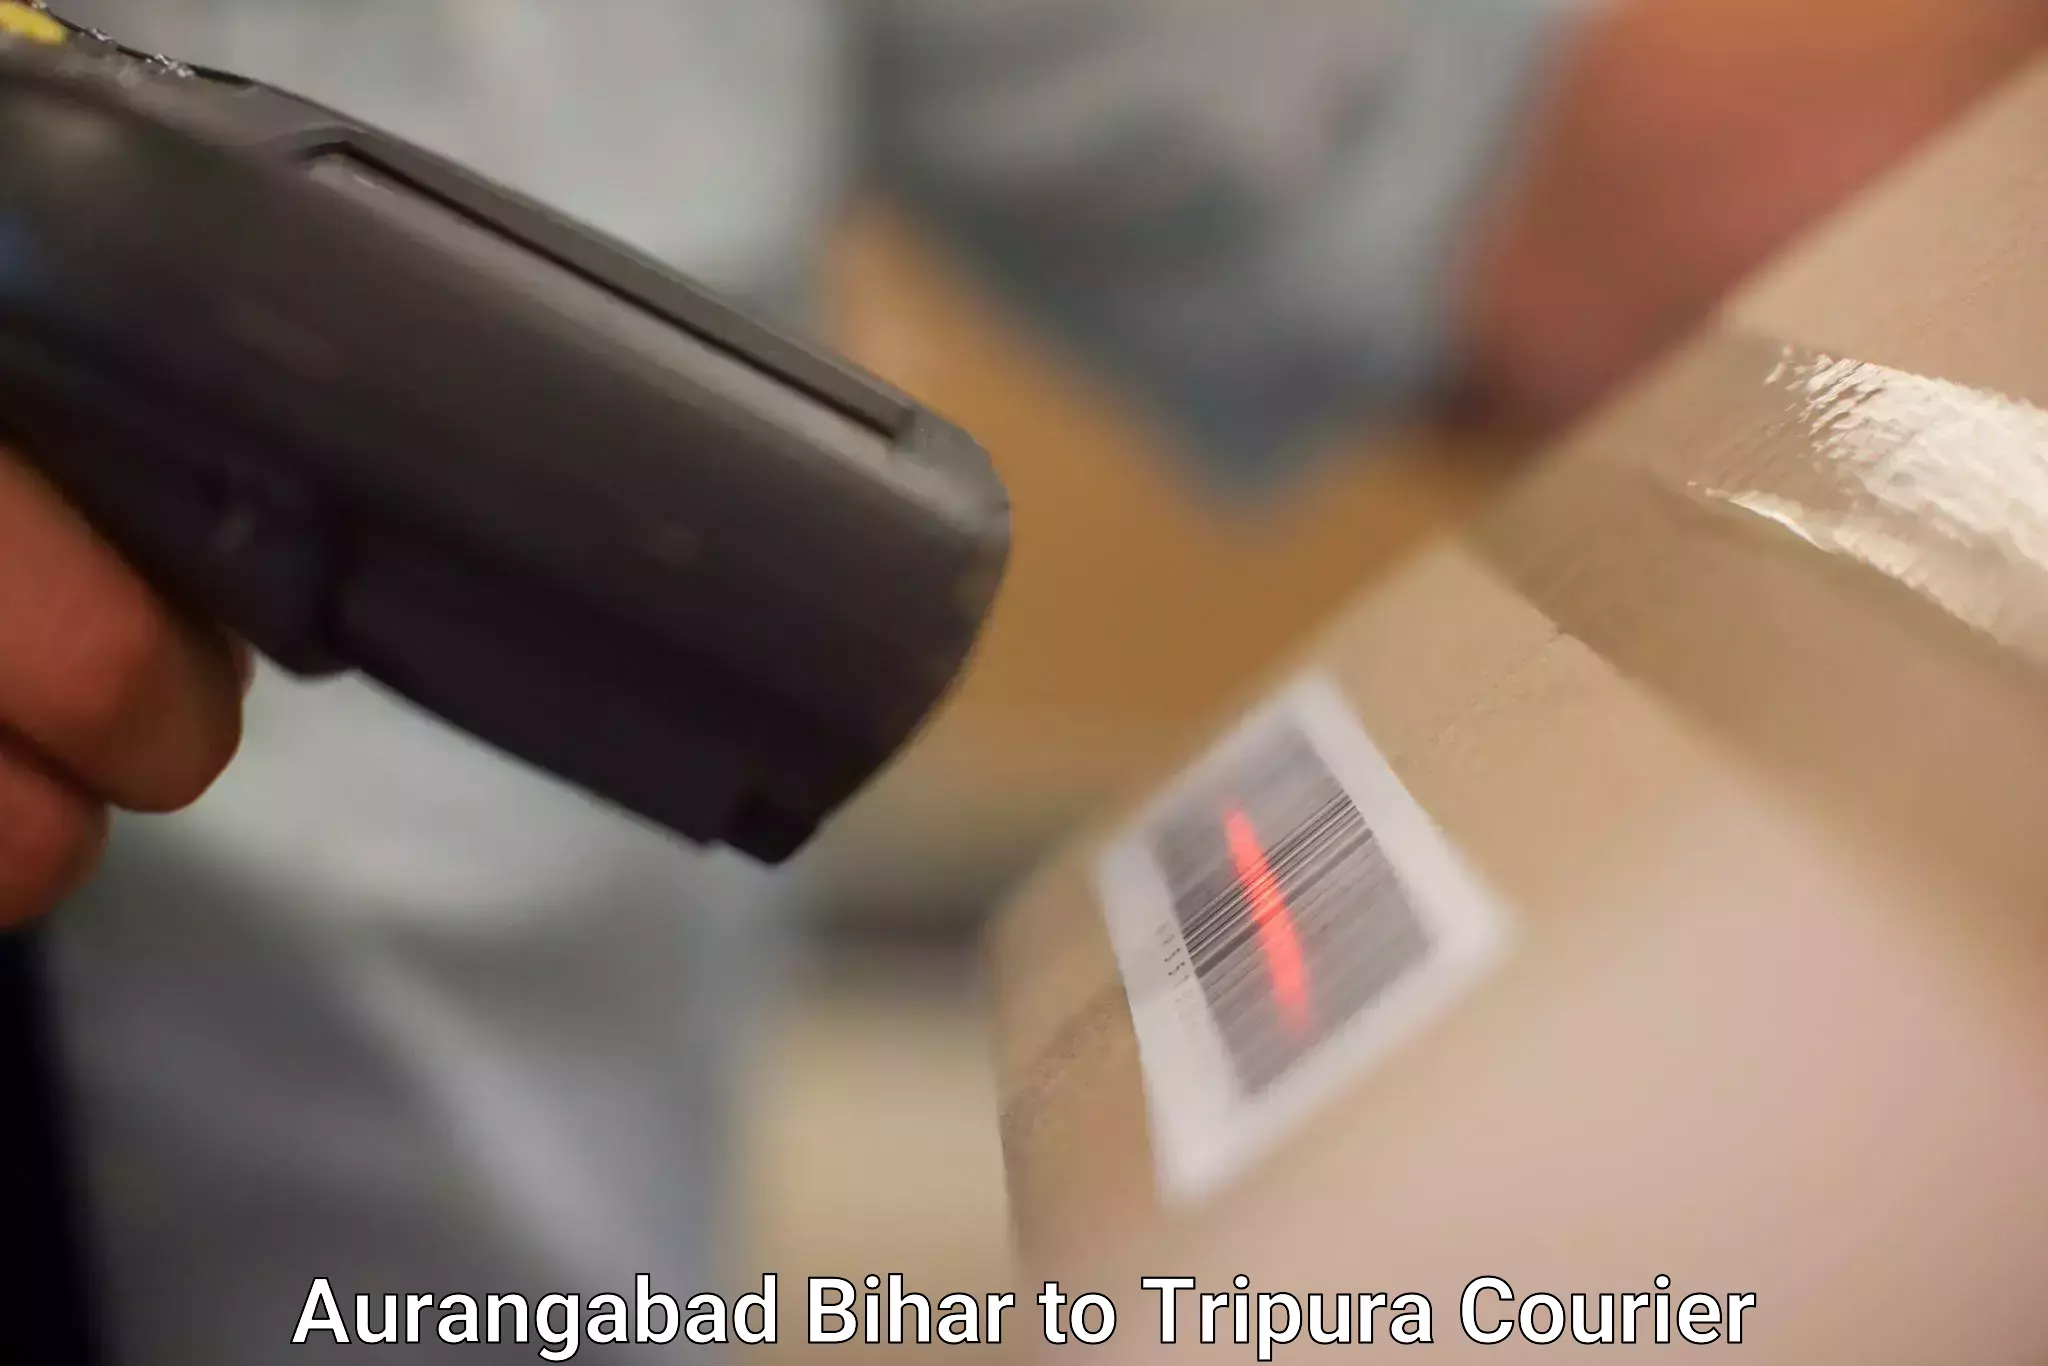 Affordable parcel service Aurangabad Bihar to Kailashahar